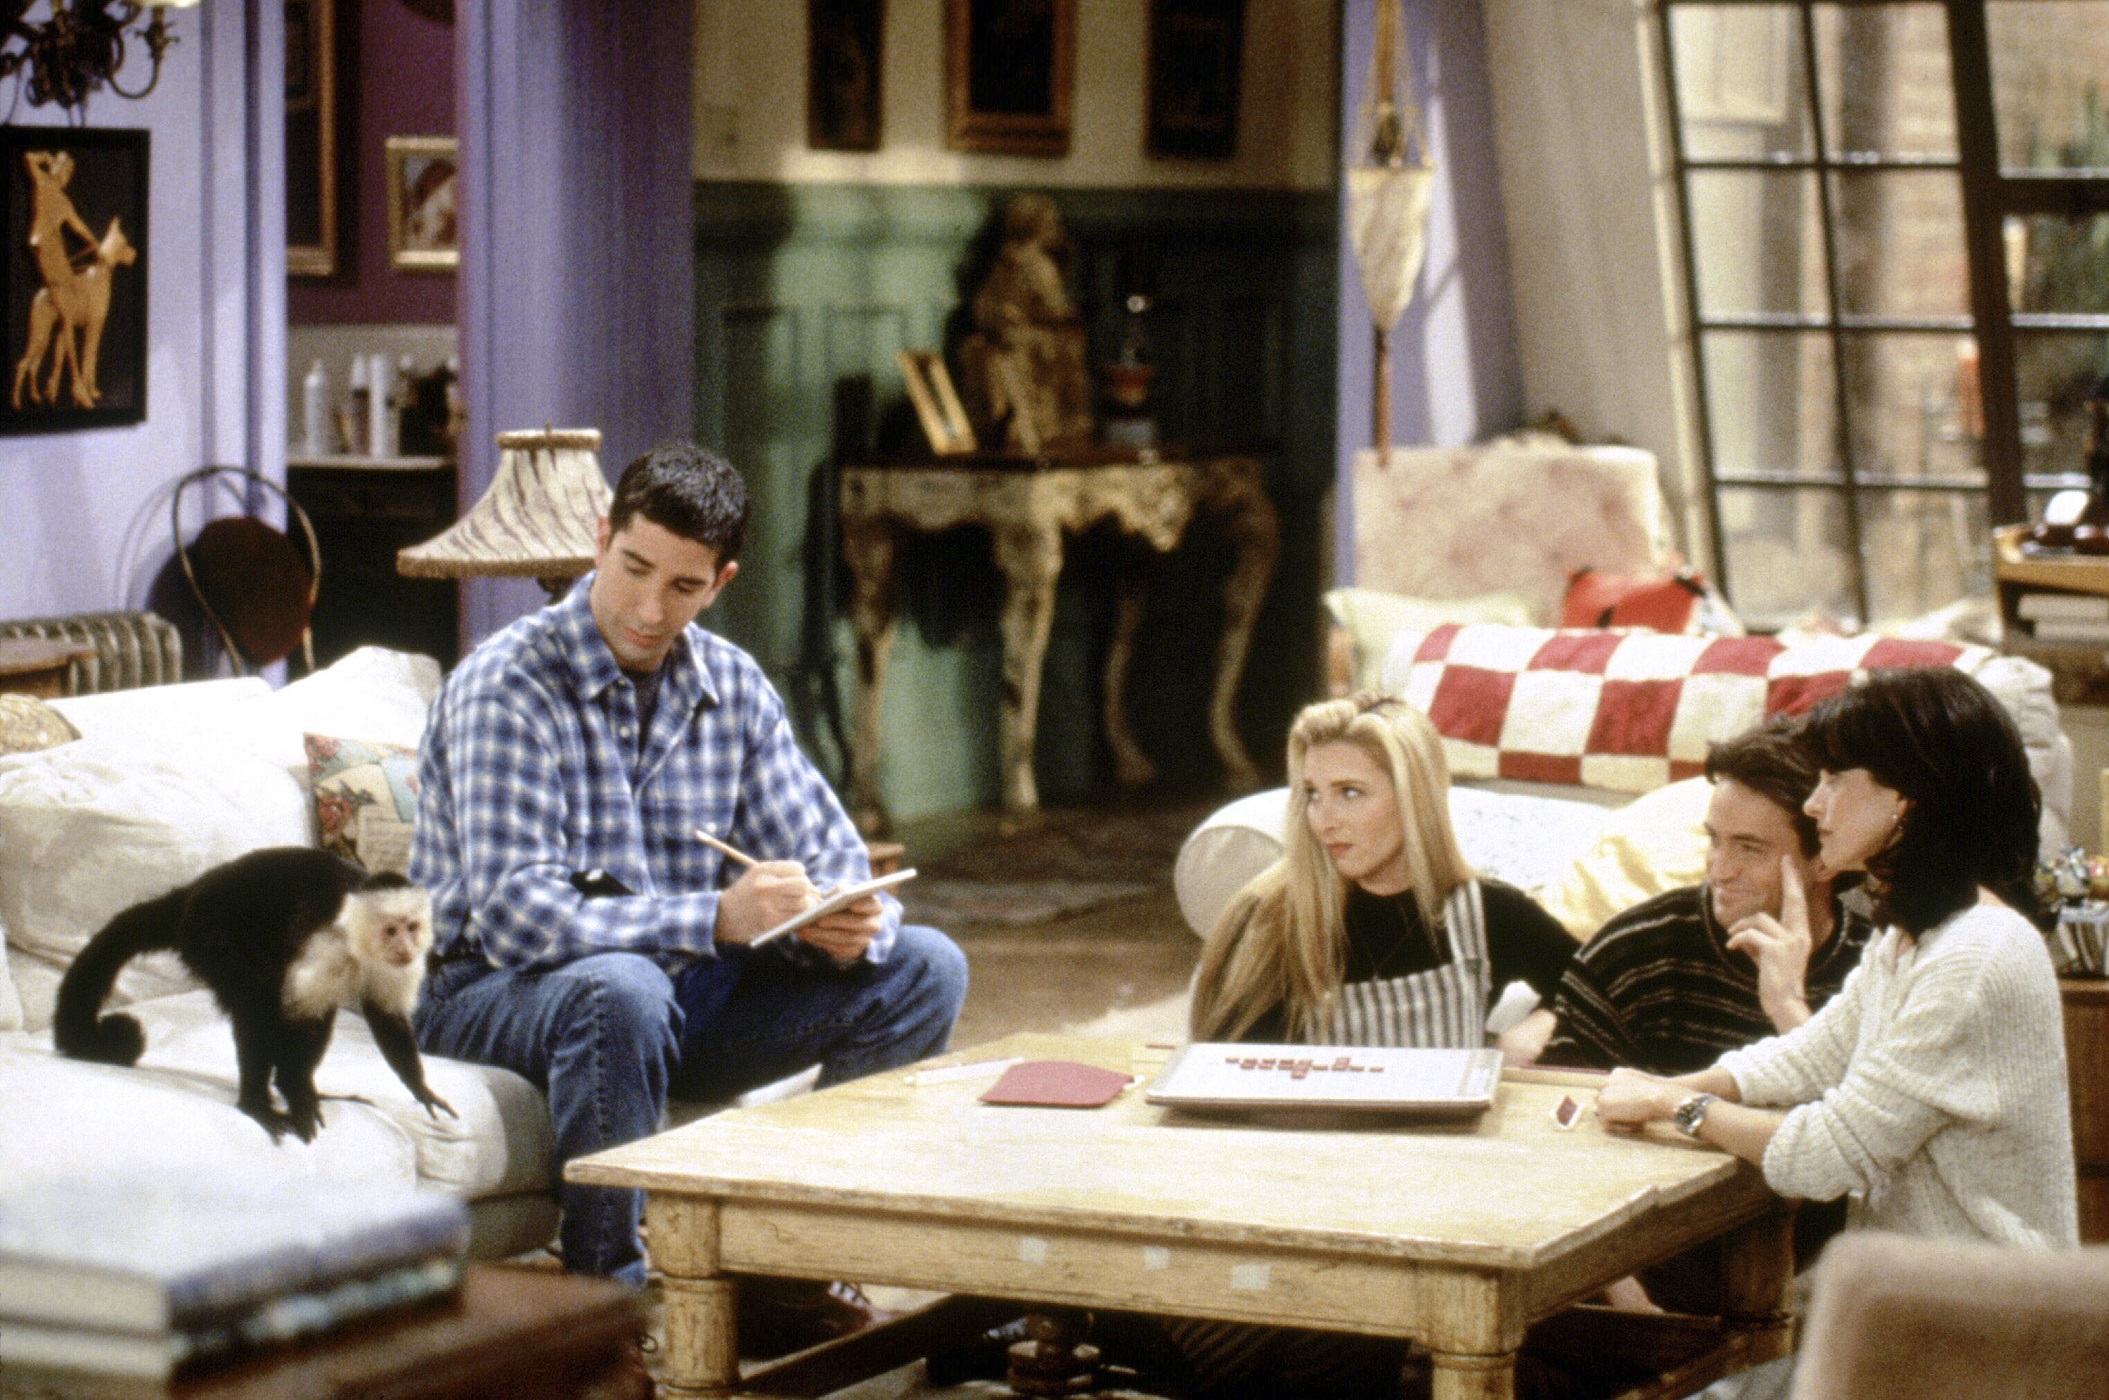 Marcel, David Schwimmer as Ross Geller, Lisa Kudrow as Phoebe Buffay, Matthew Perry as Chandler Bing and Courteney Cox as Monica Geller in Monica and Rachel's apartment